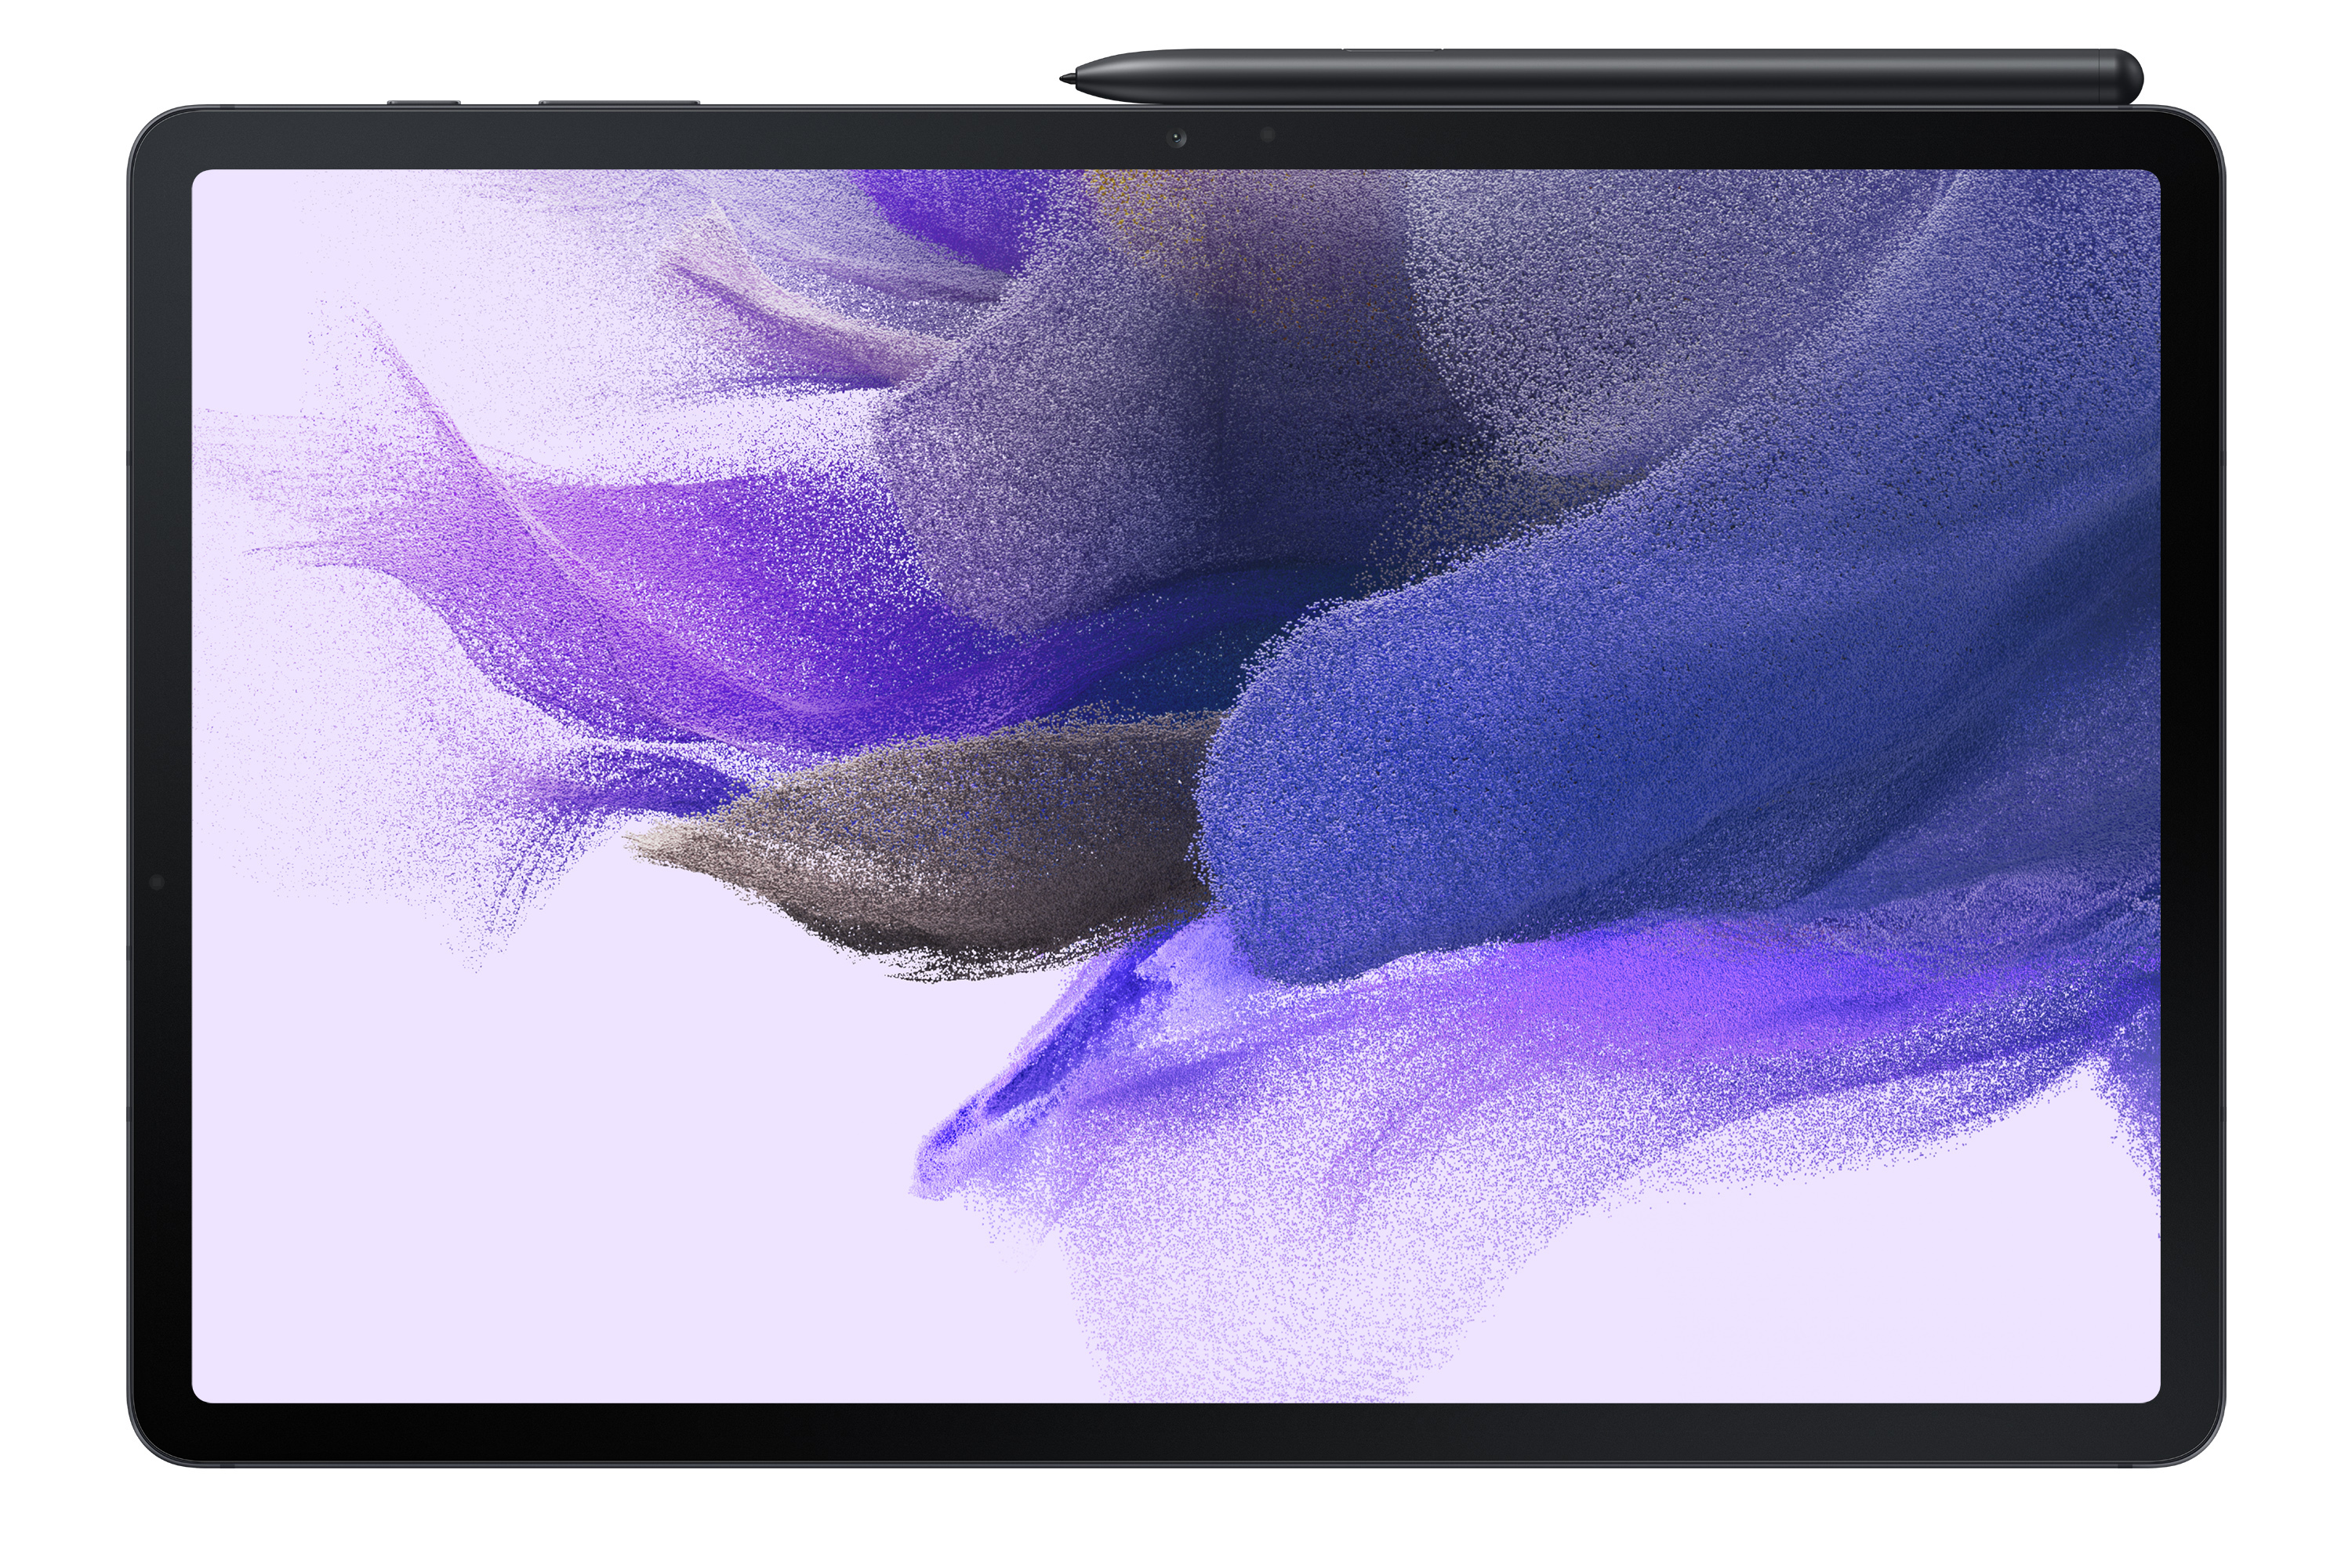 Bespreken Festival violist Samsung Galaxy Tab S7 FE 12,4 inch / zwart / 128 GB / 5G tablet kopen? |  Kieskeurig.nl | helpt je kiezen